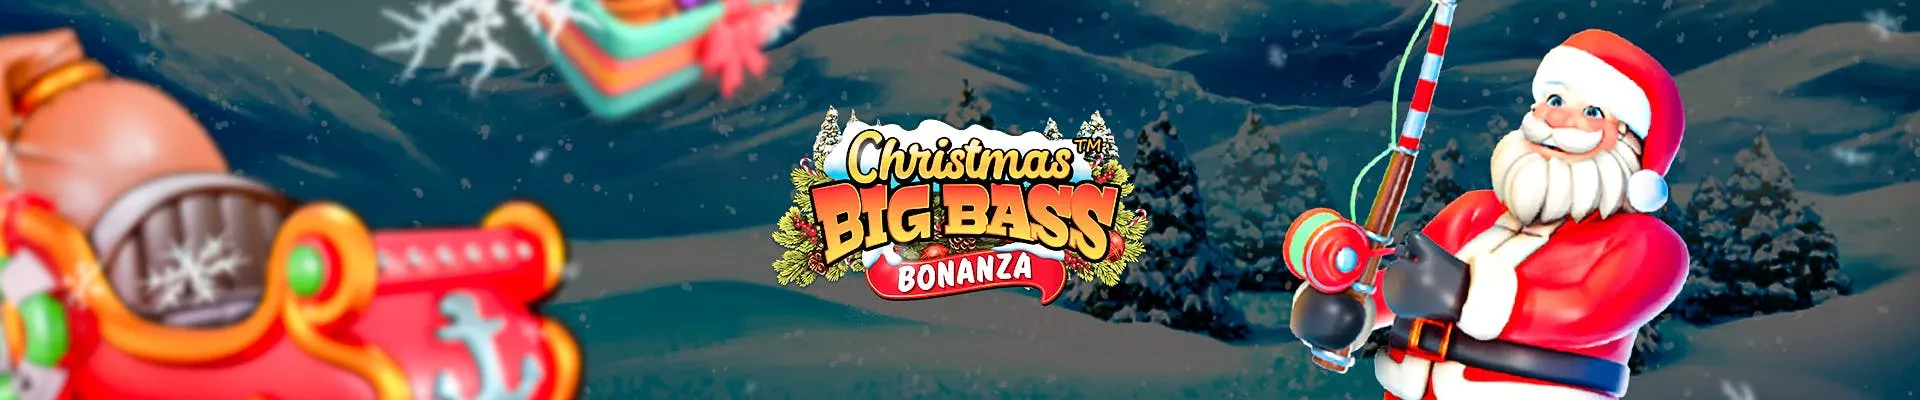 focus christmas big bass bonanza header